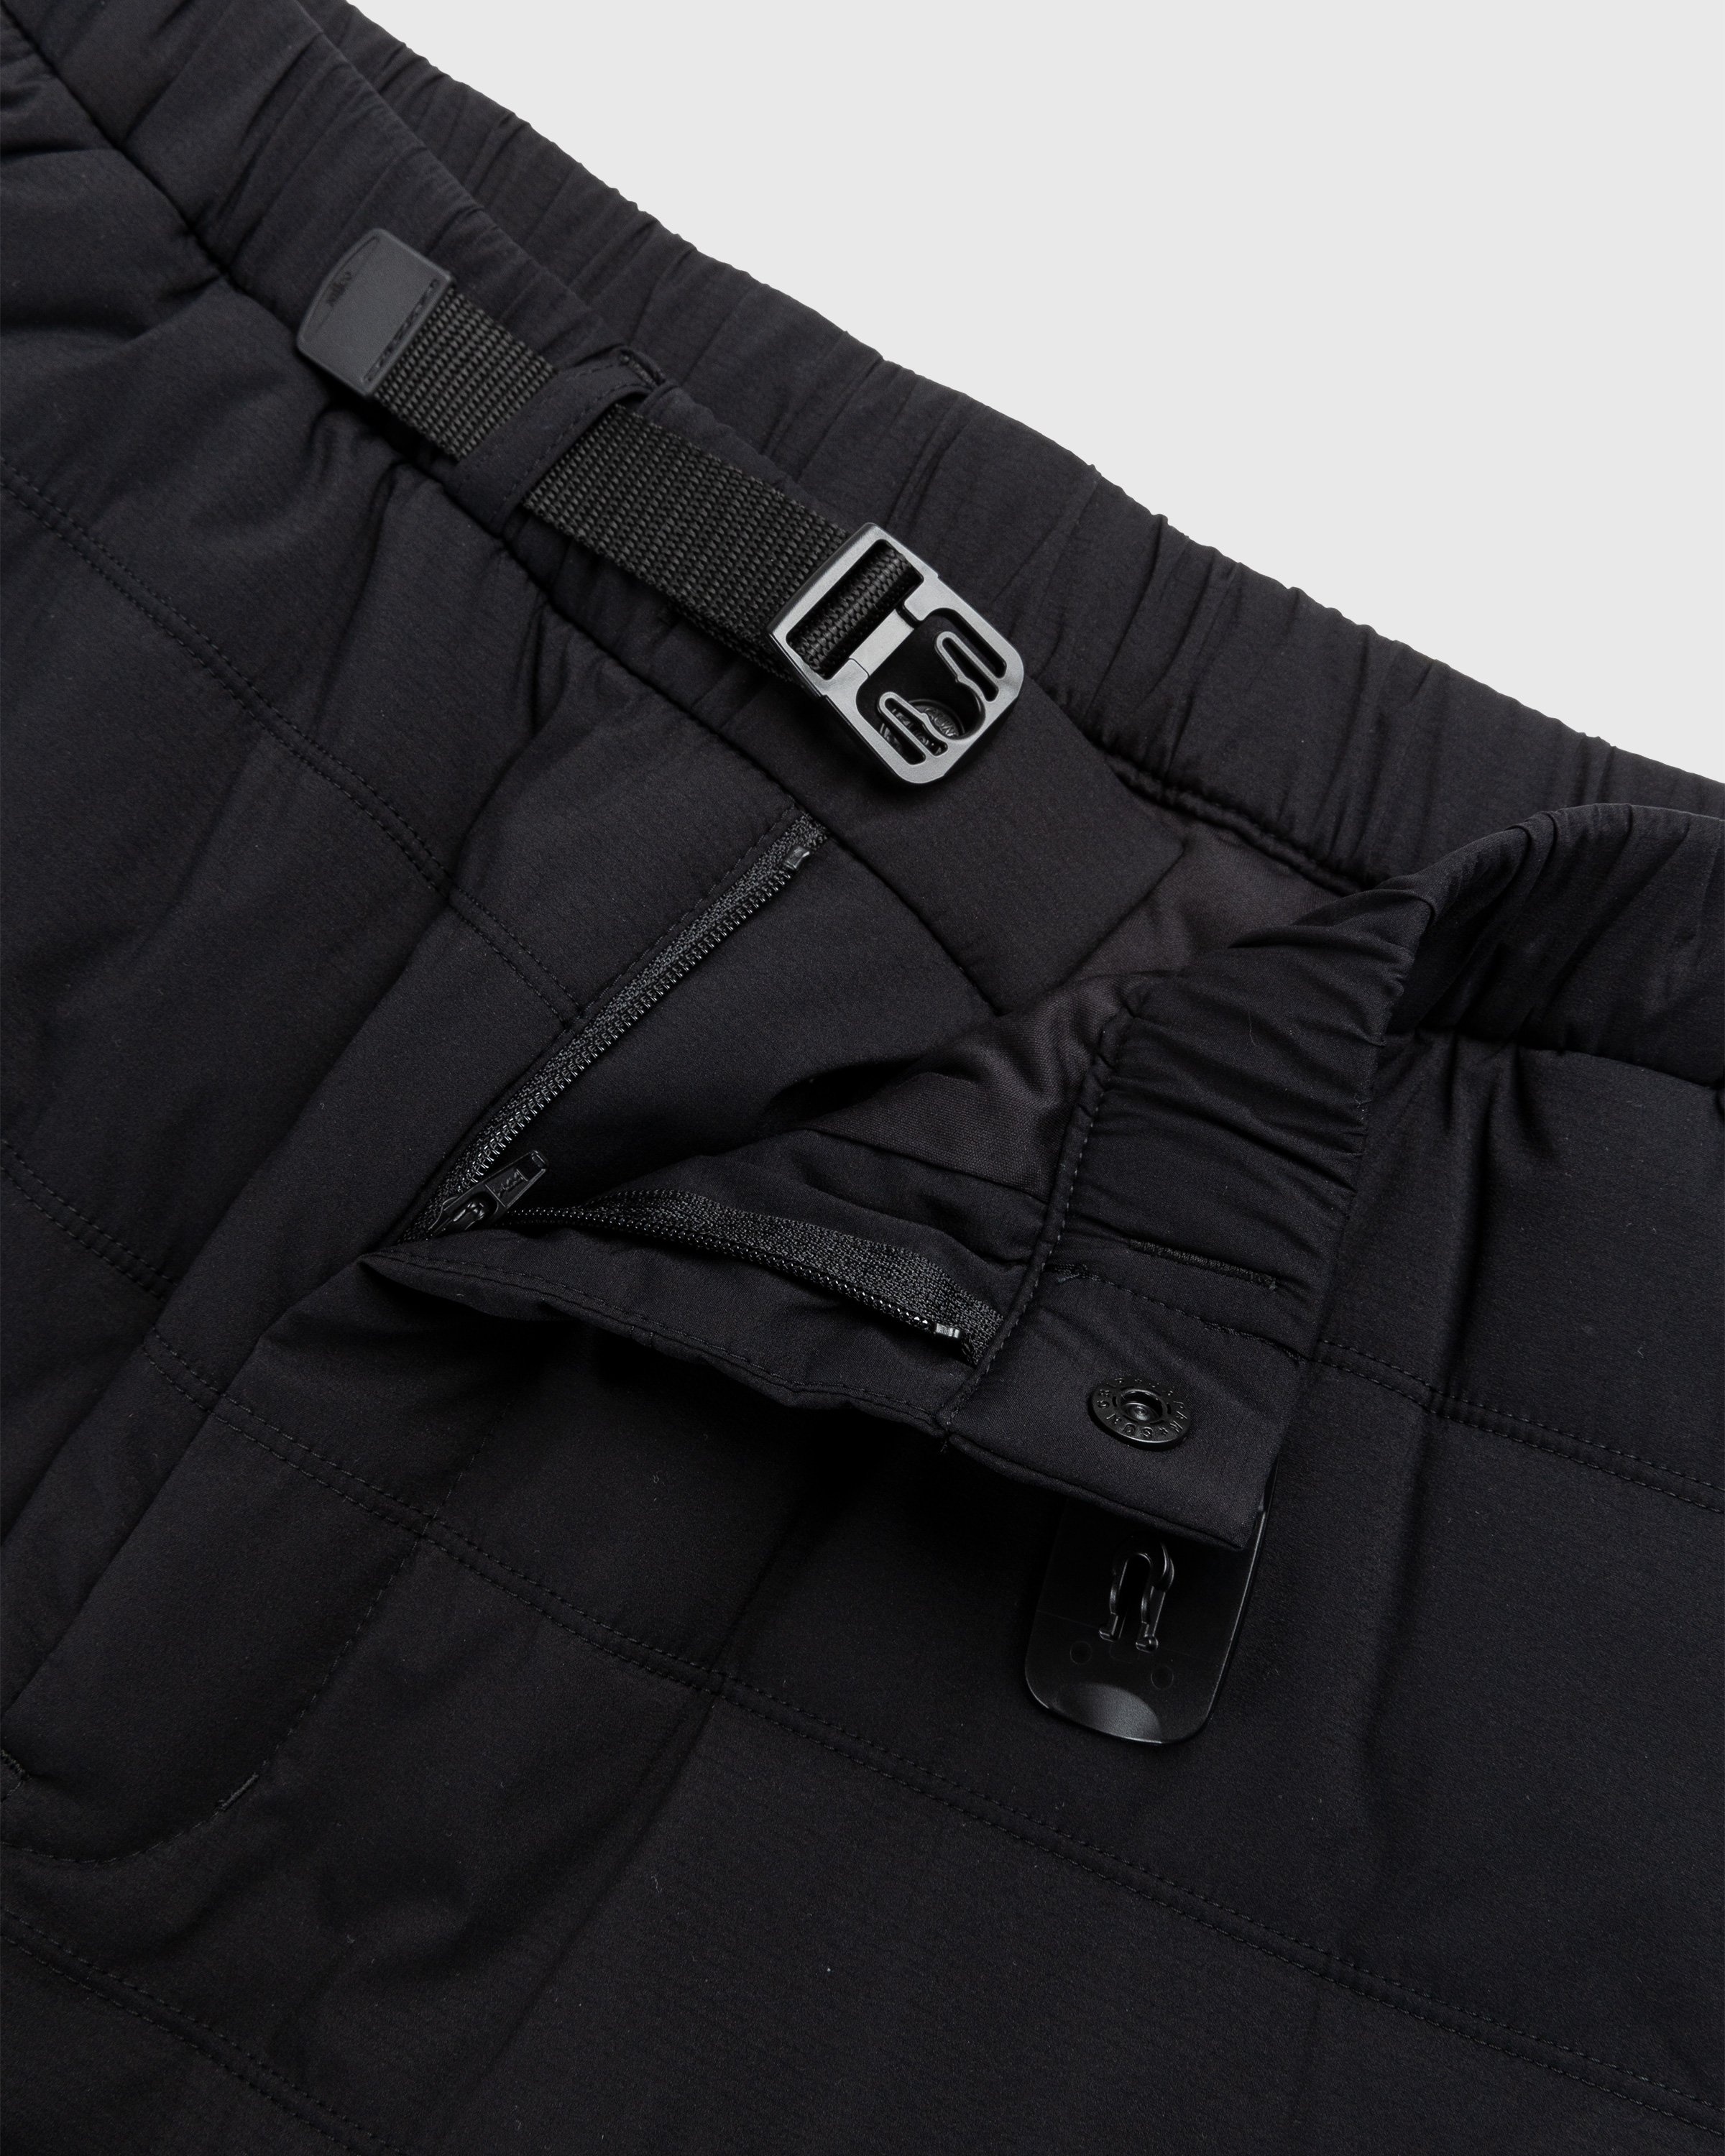 Snow Peak – Flexible Insulated Pants Black - Active Pants - Black - Image 5